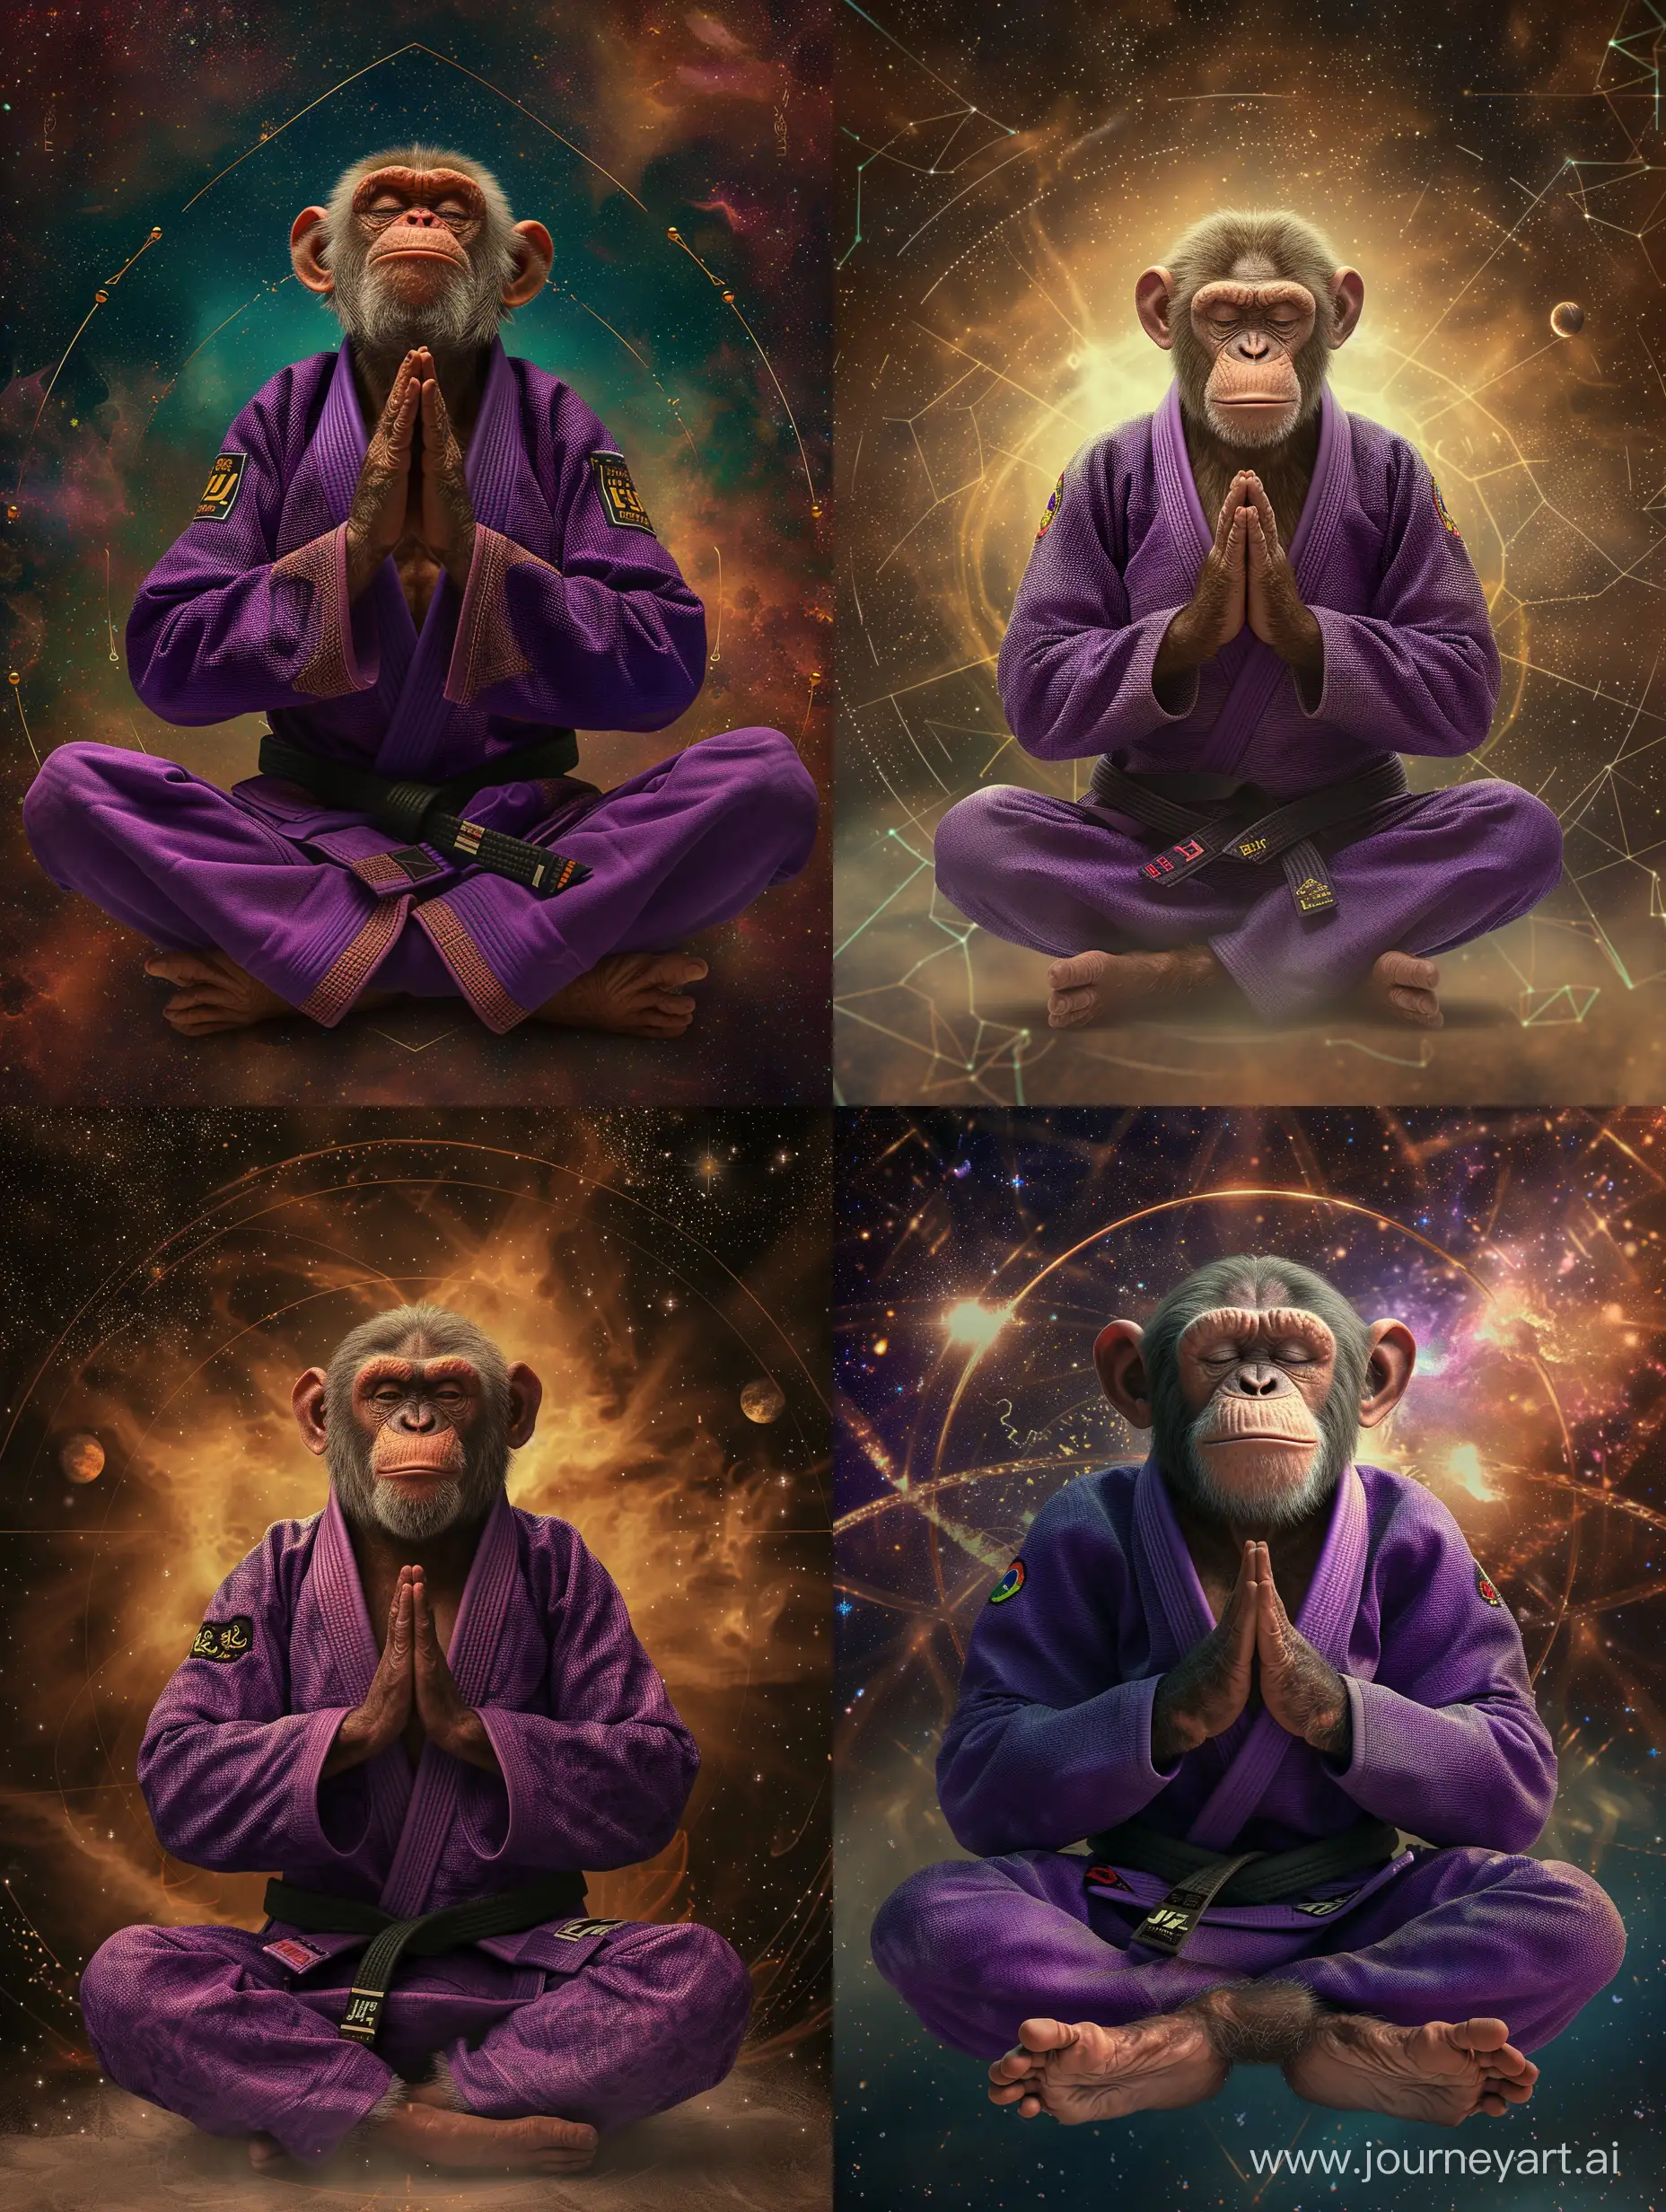 Meditating-Monkey-in-Purple-Brazilian-Jiu-Jitsu-Gi-with-Cosmic-Background